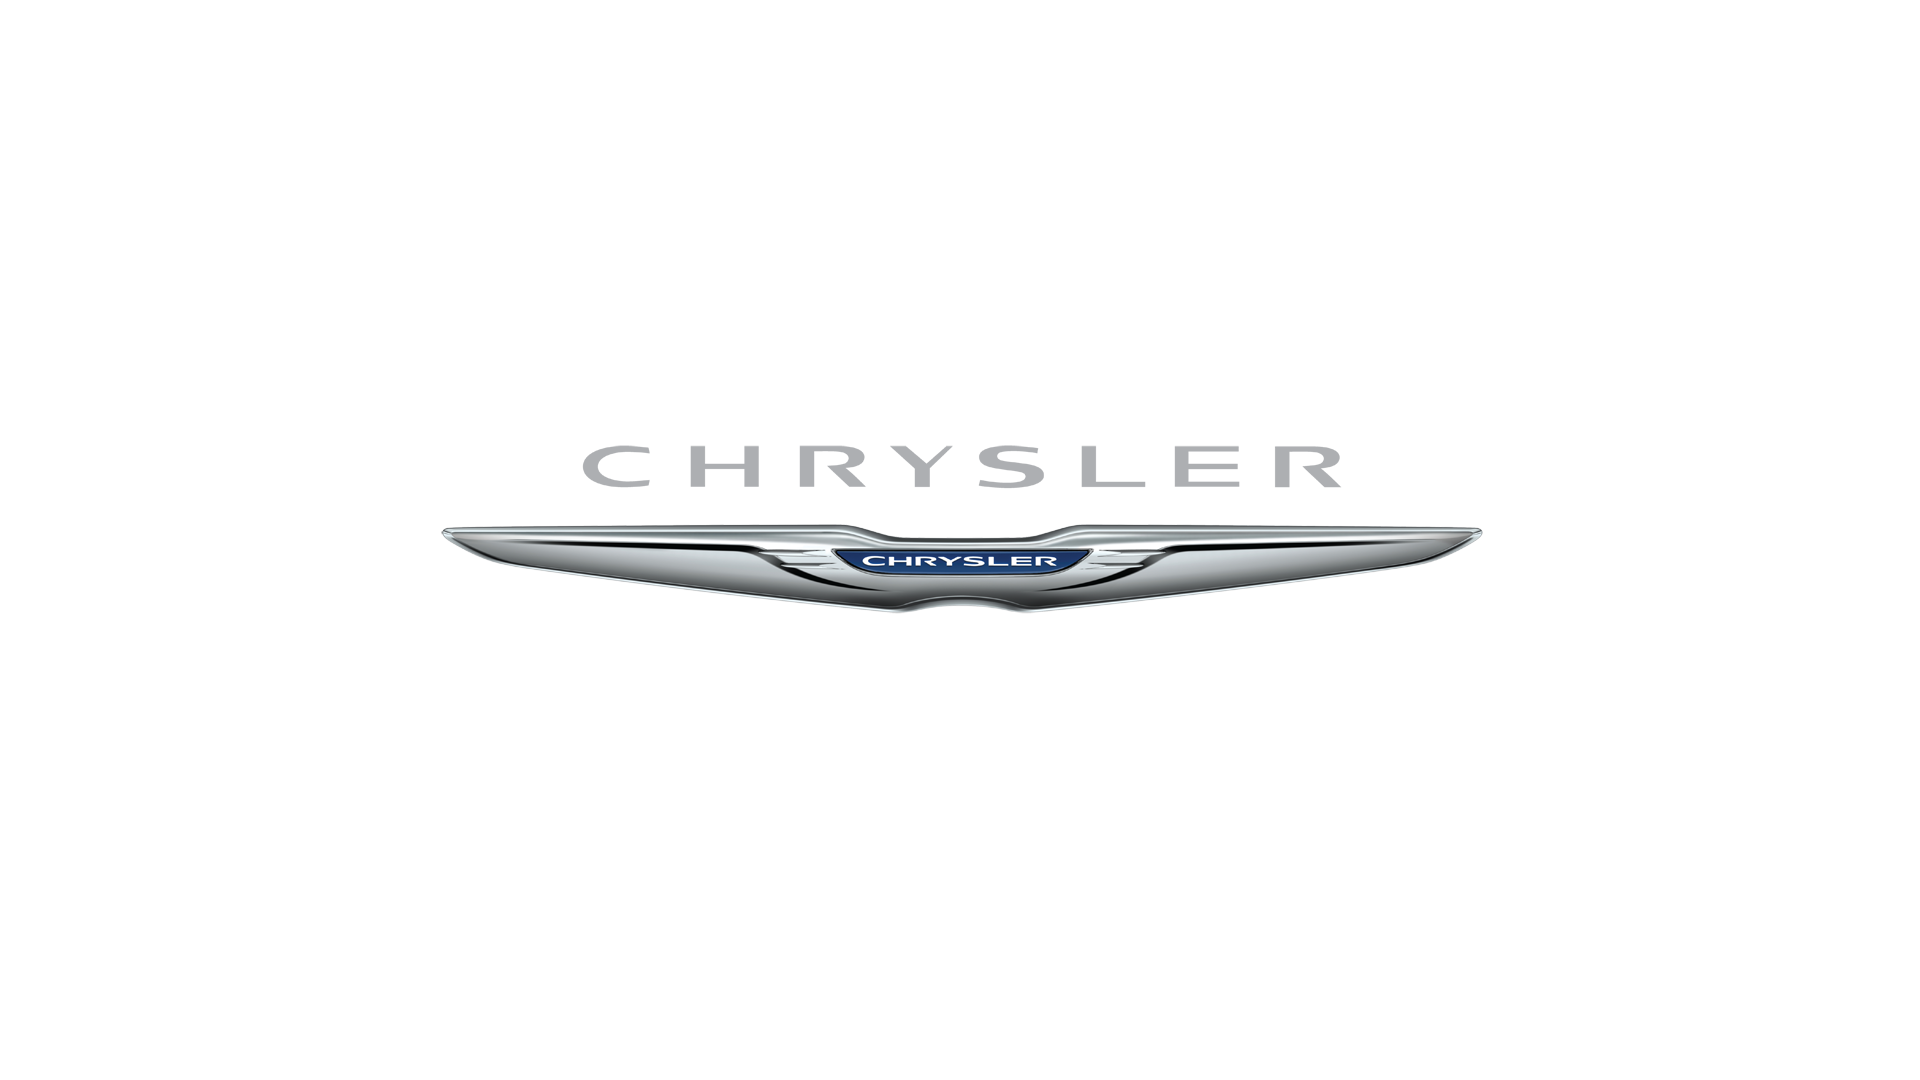 The History of Chrysler